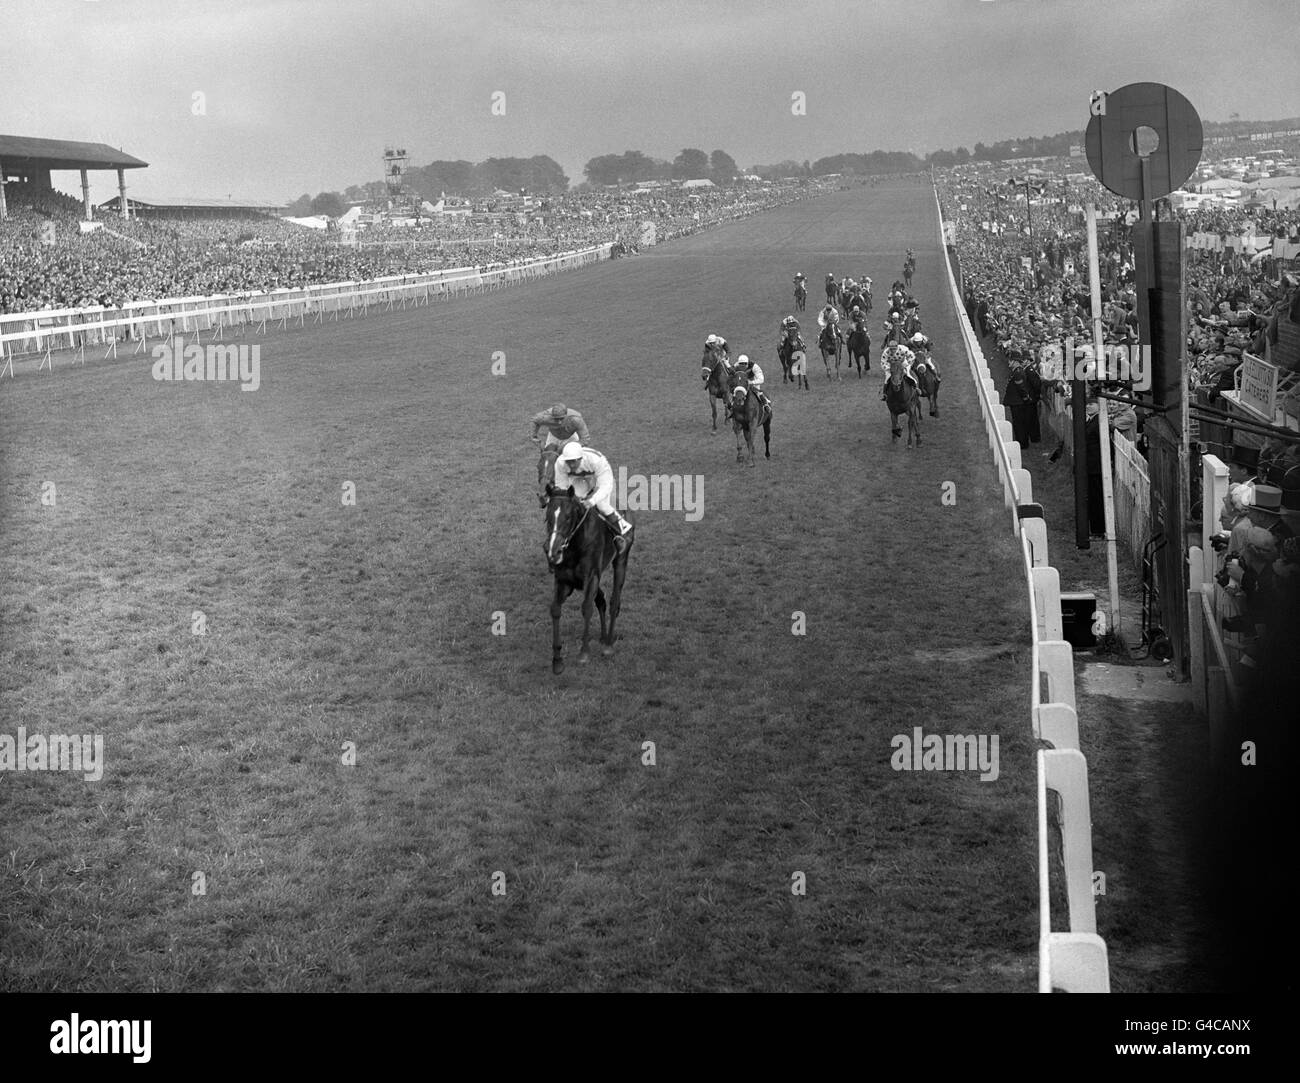 Horse Racing - 1955 Epsom Derby - Epsom Downs Racecourse Stock Photo